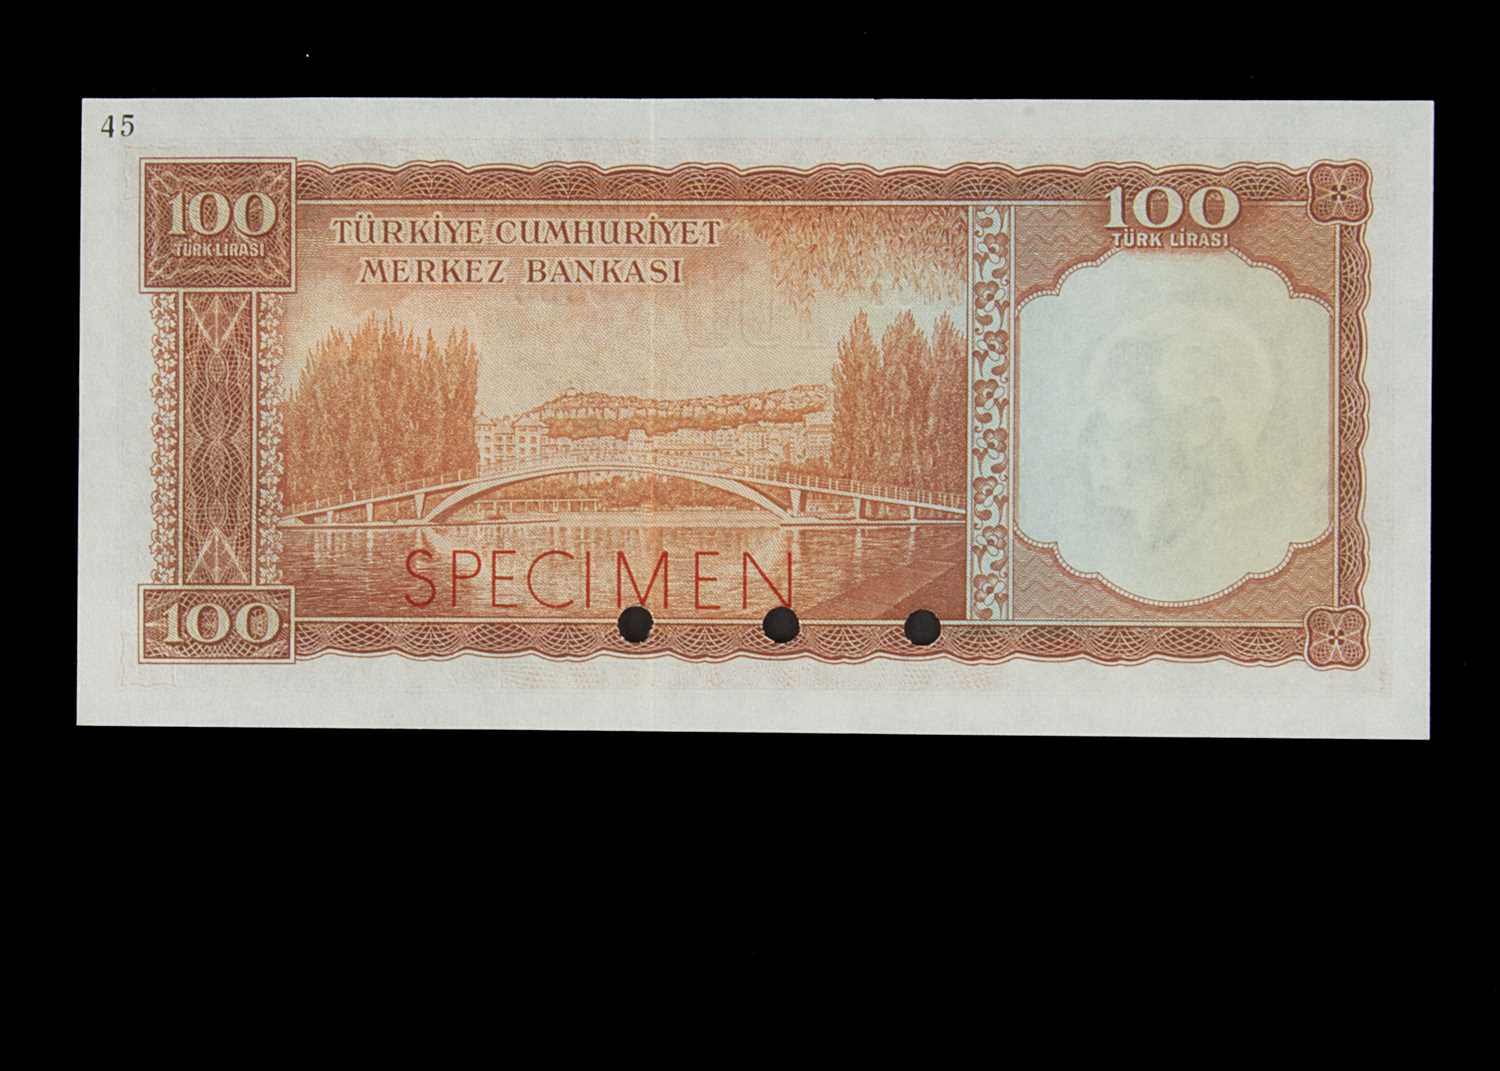 Specimen Bank Note: Turkey specimen 100 Turk Lirasi, - Image 2 of 2